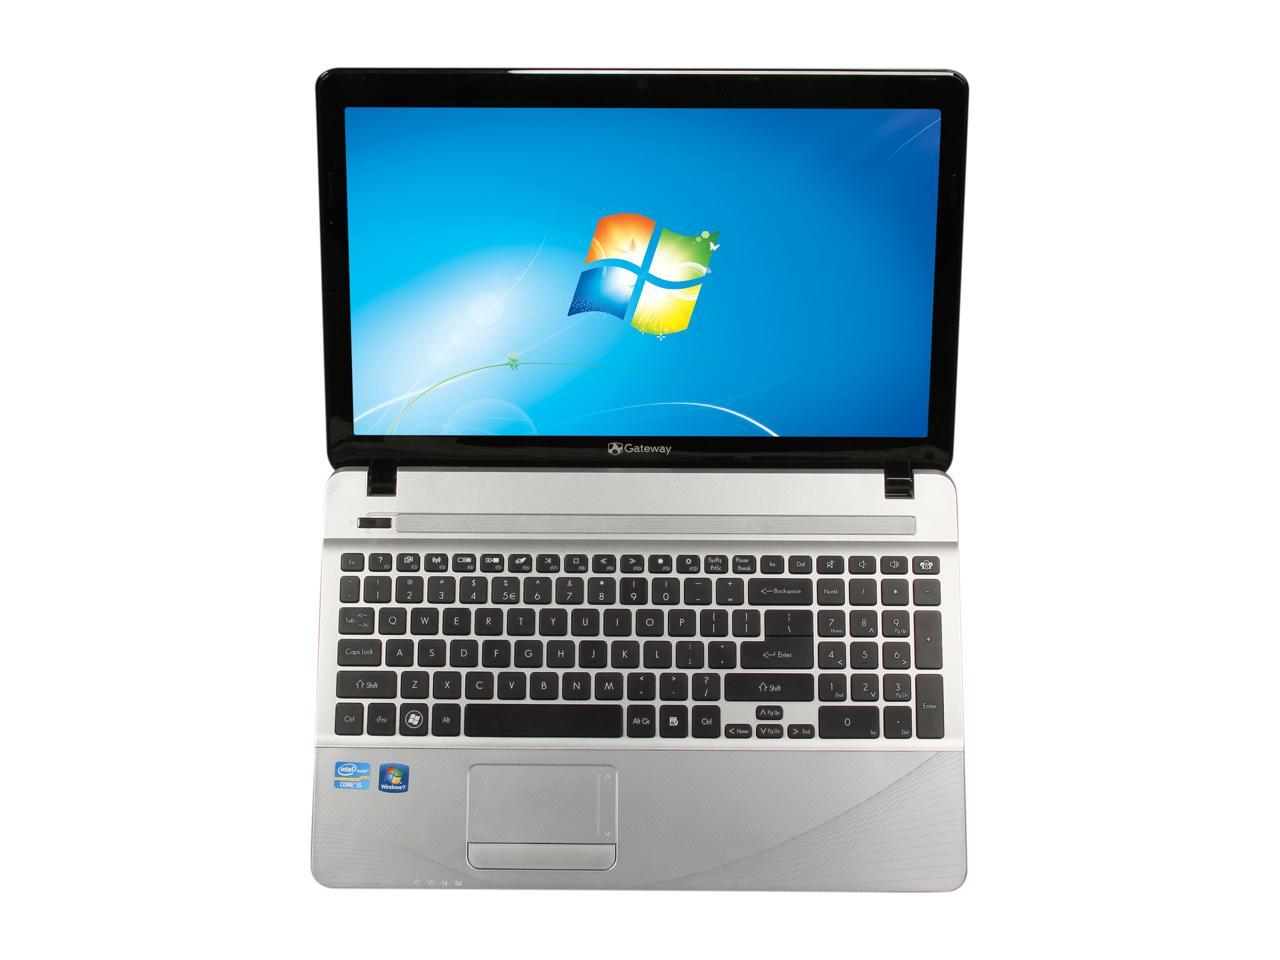 can a gateway laptop nv57h support intel core i5 2450m cpu